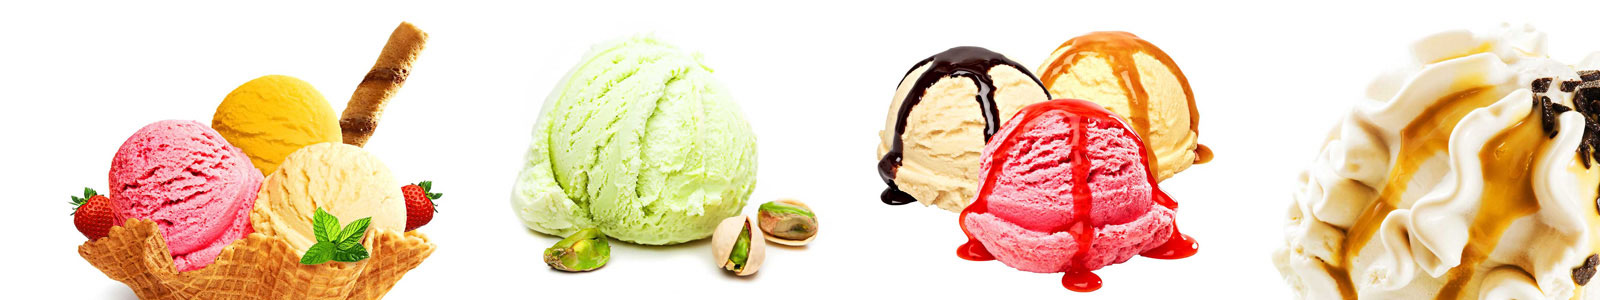 №6151 - Вкусное мороженое на белом фоне